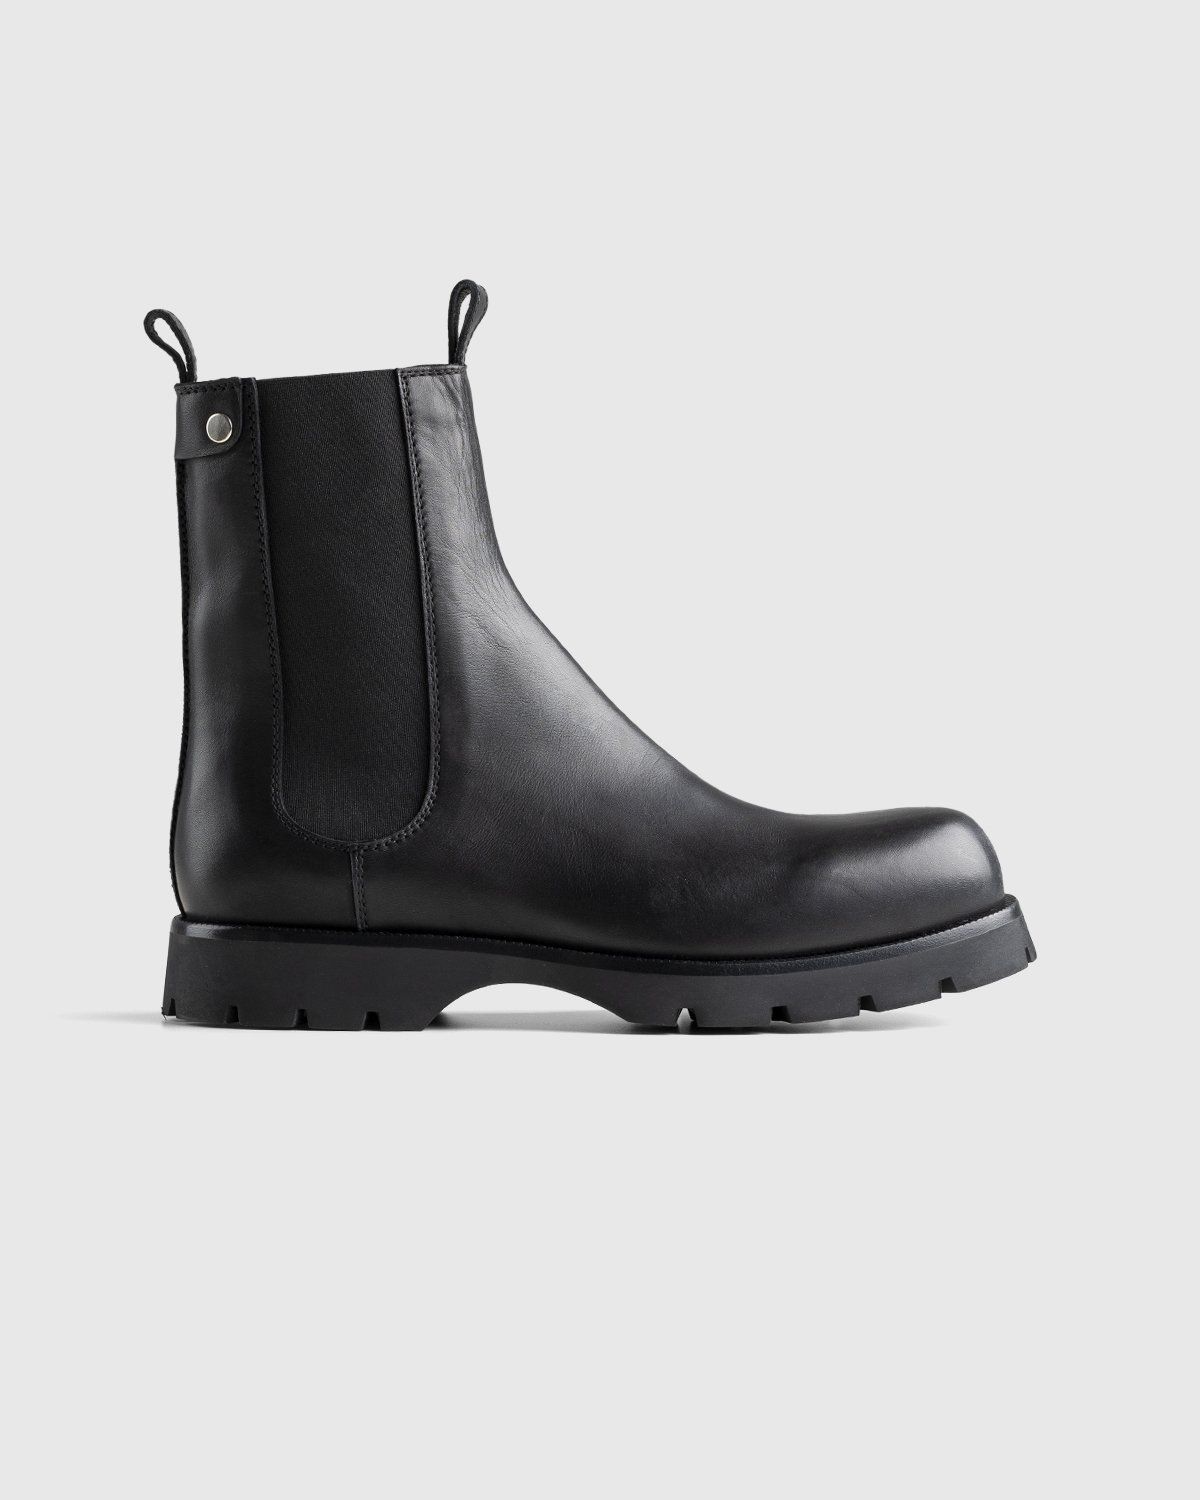 Jil Sander – Chelsea Boots Black - Chelsea Boots - Black - Image 1